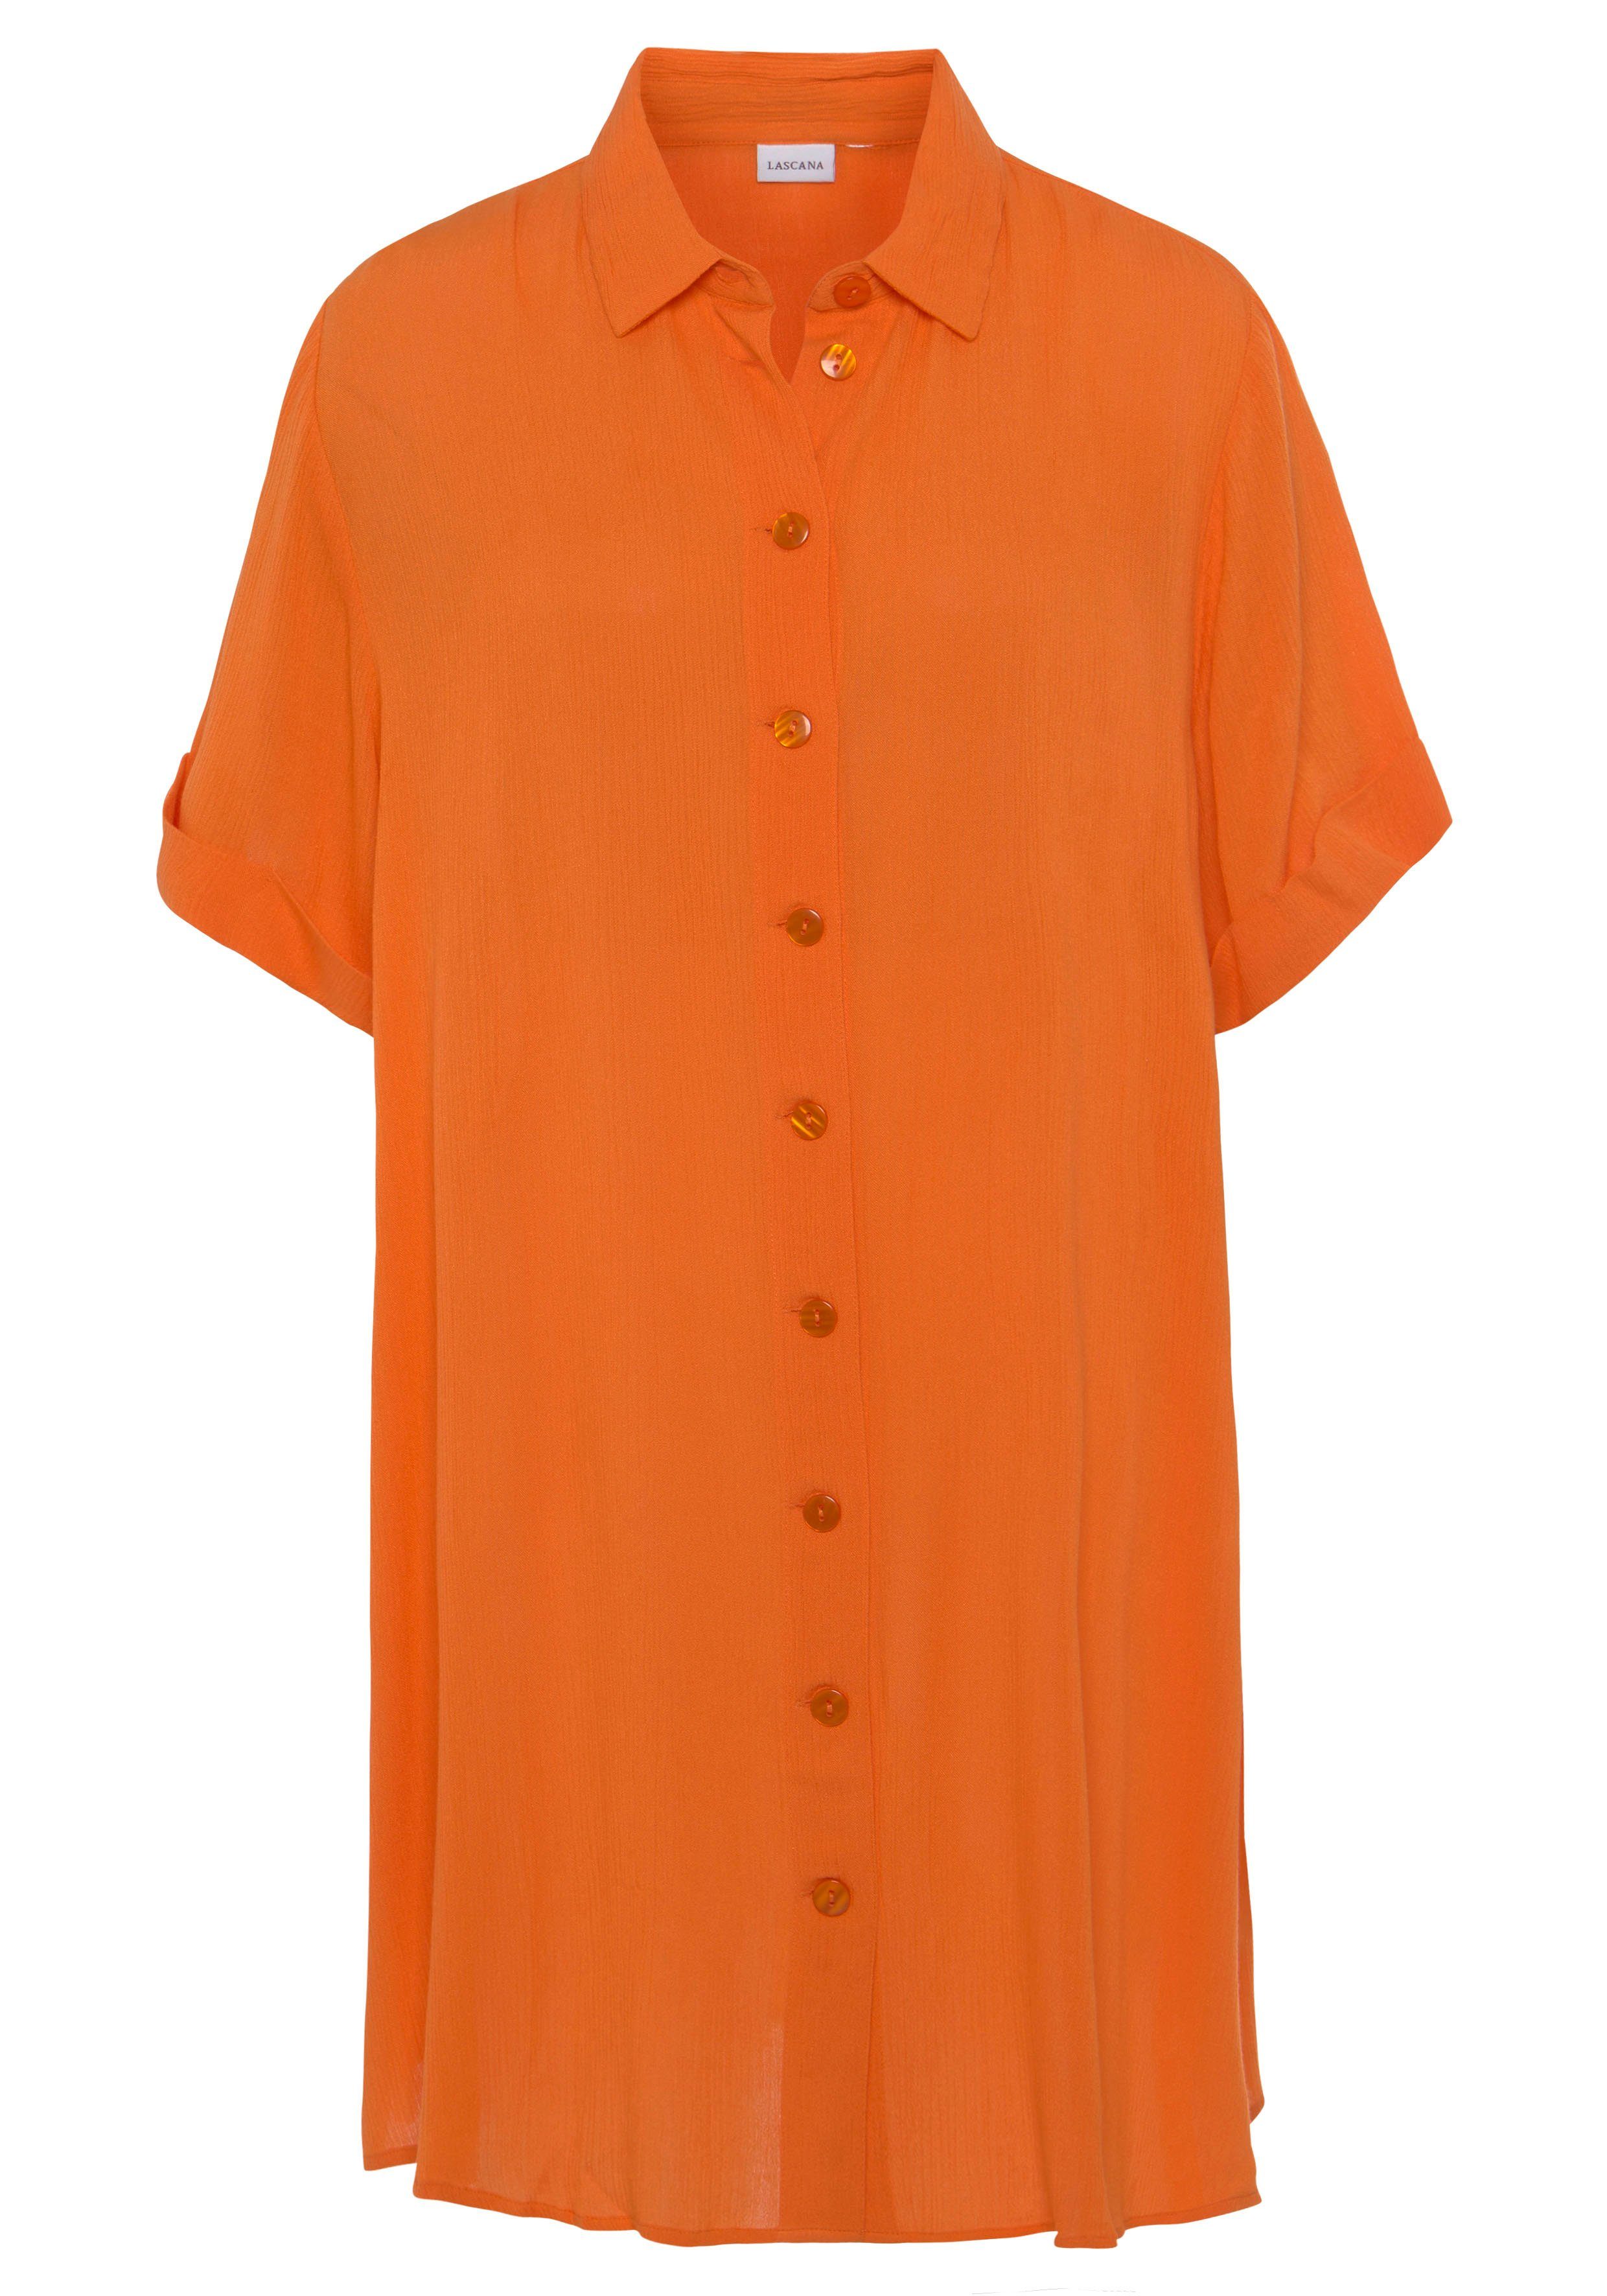 LASCANA Longbluse mit Knopfleiste, Kurzarmbluse, sommerlich Blusenkleid, orange